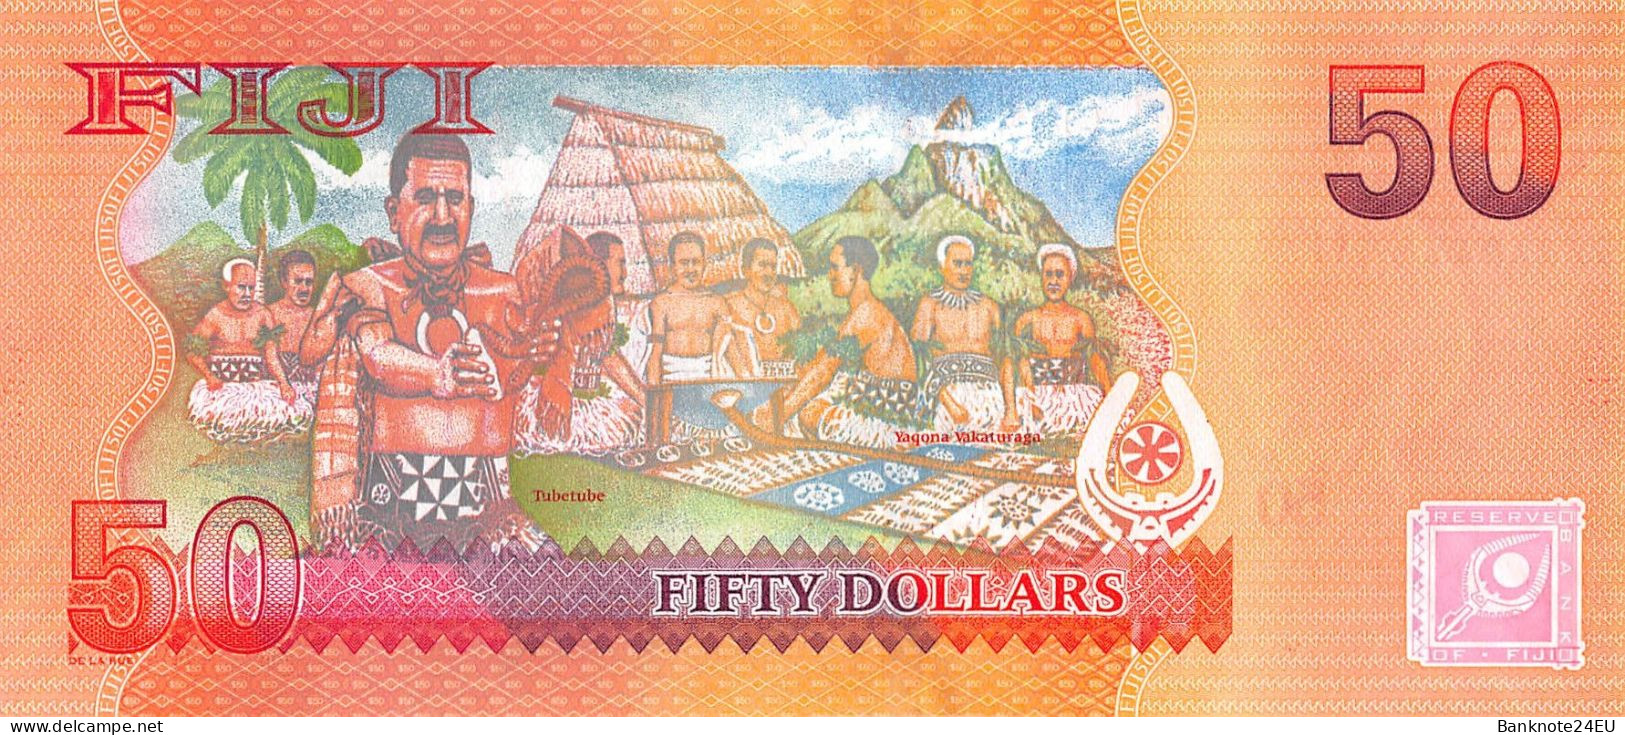 Fiji Islands 50 Dollars 2012 Unc Pn 118a, Banknote24 - Fiji